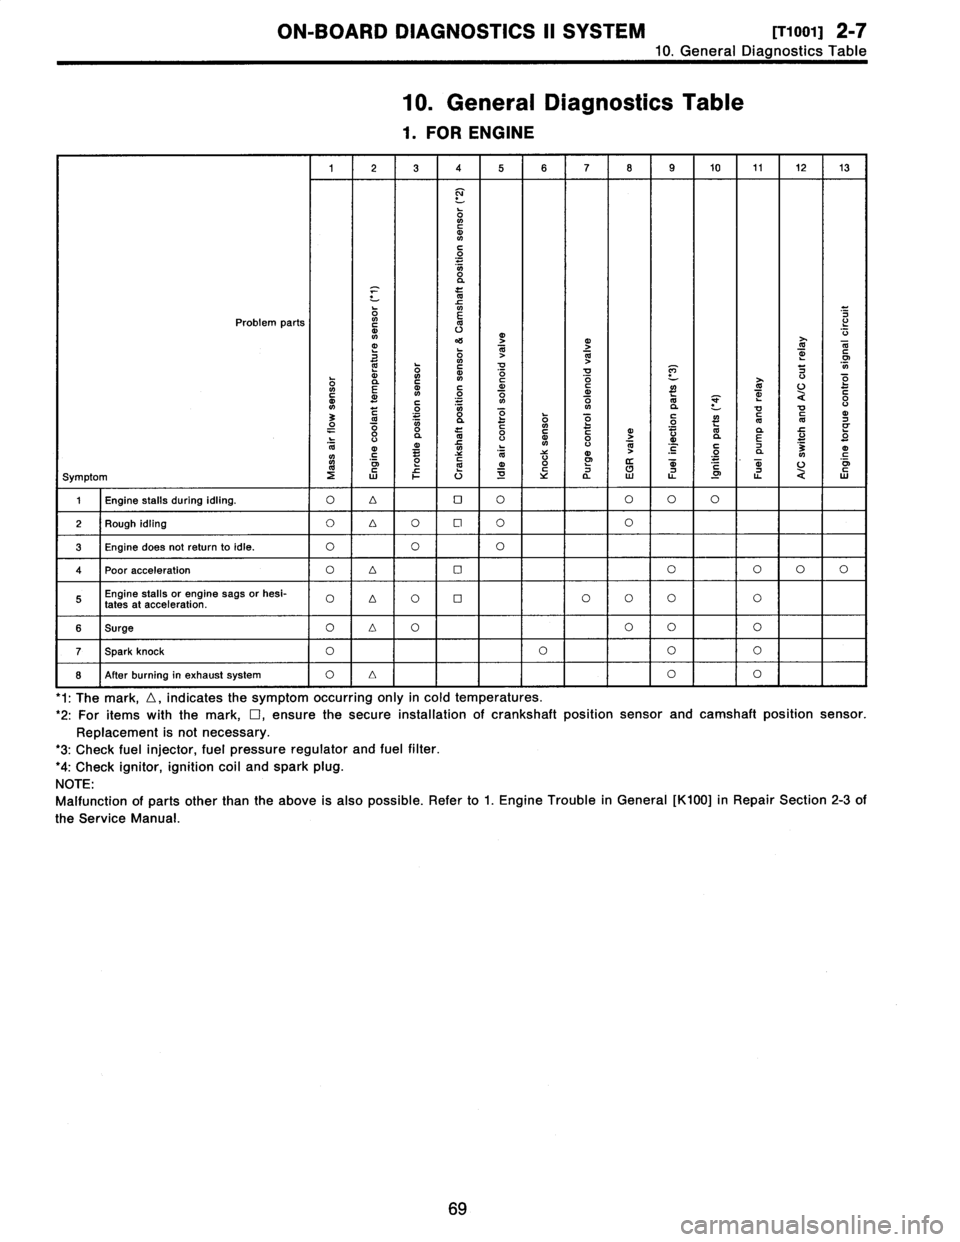 SUBARU LEGACY 1996  Service Repair Manual 
ON-BOARD
DIAGNOSTICS
II
SYSTEM
[Tyooyl
2-7
10
.
General
Diagnostics
Table

10
.
General
Diagnostics
Table

1
.
FOR
ENGINE

1
23
4
5678
9
10
11
1213

N

ONCdN
C
O
O
a
x
m

Problem
parts
`o
m
v

mj
4S